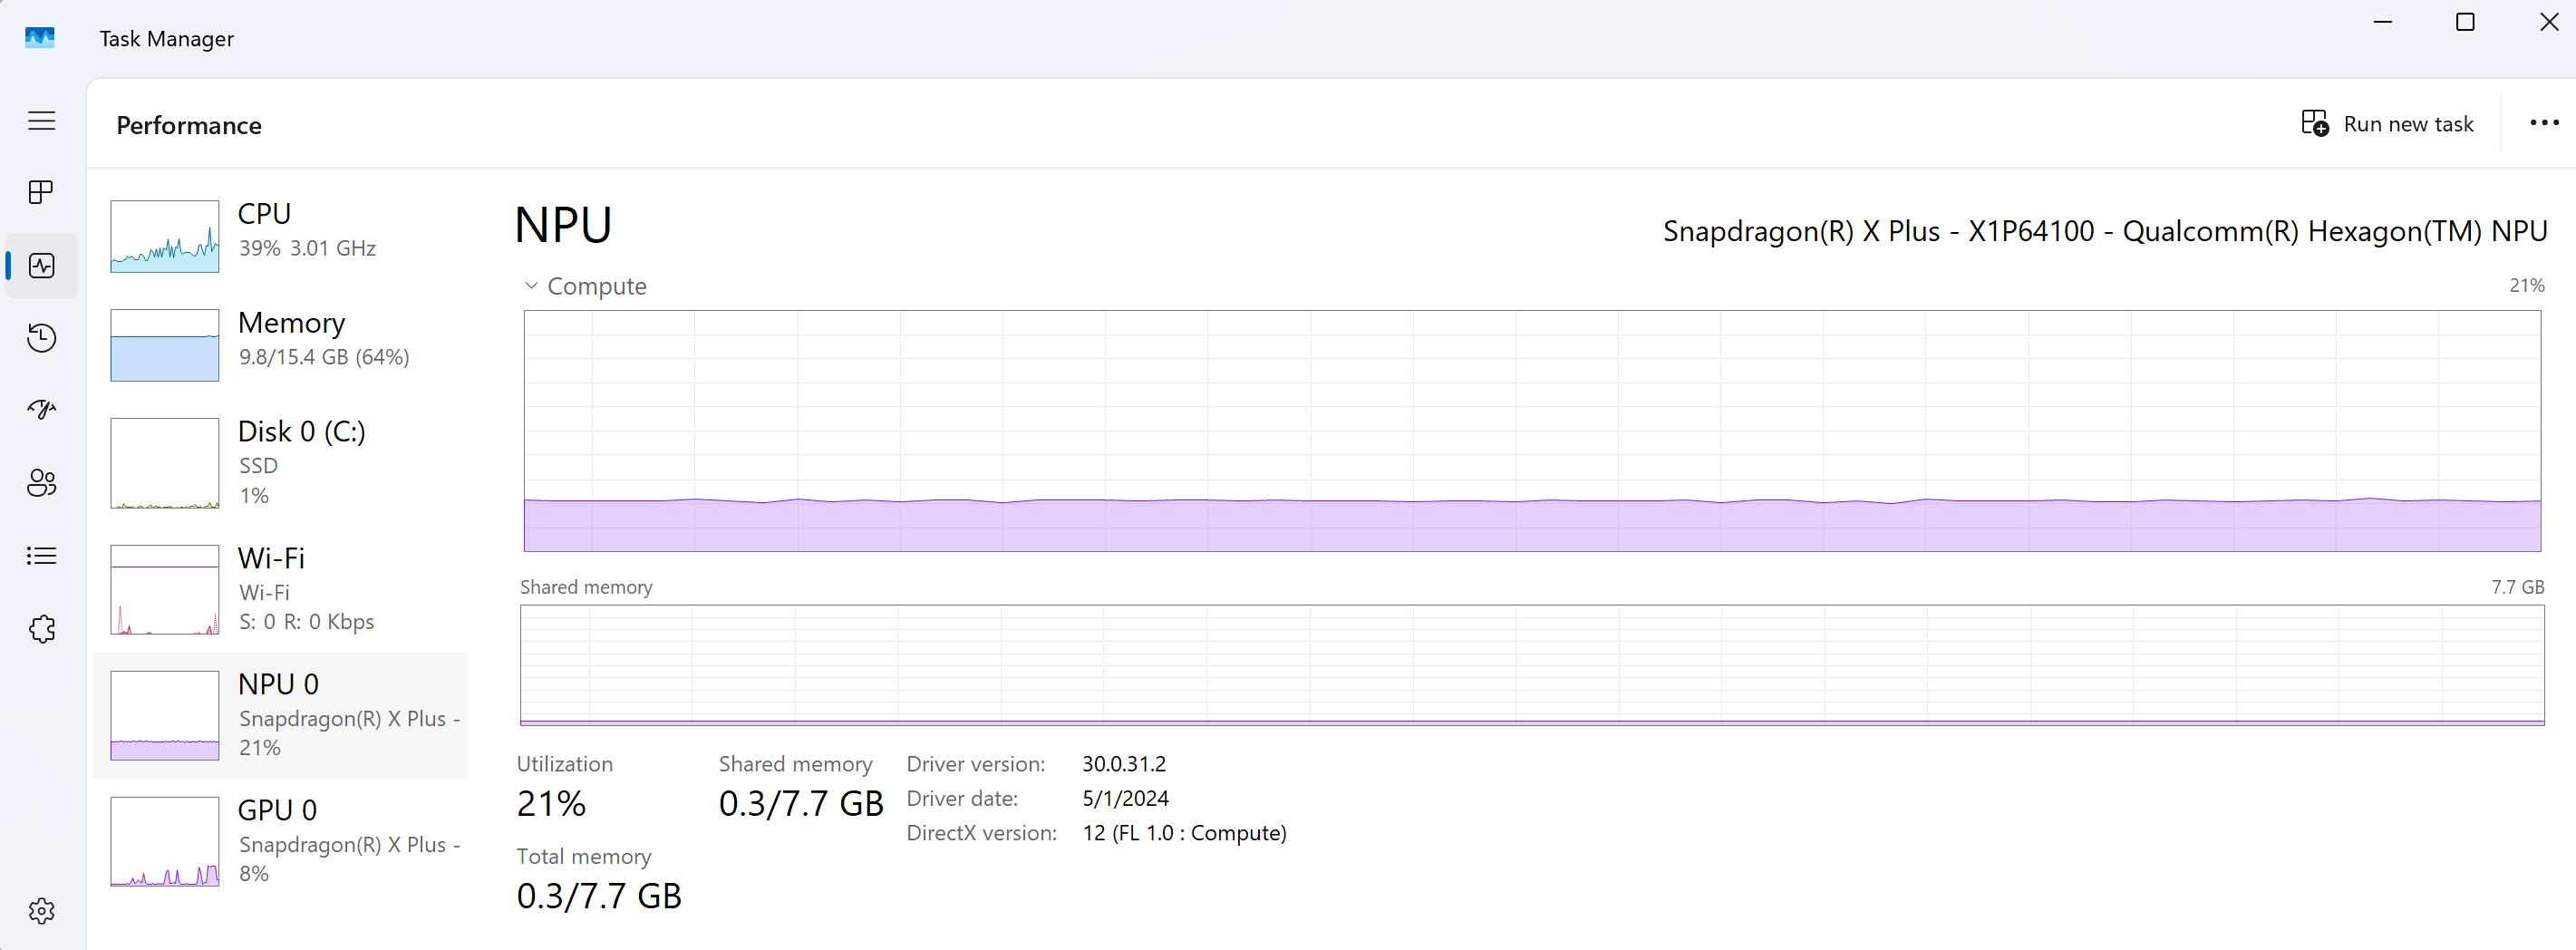 Screenshot of Windows Task Manager displaying NPU performance alongside CPU, GPU, Memory, Ethernet, and Disk